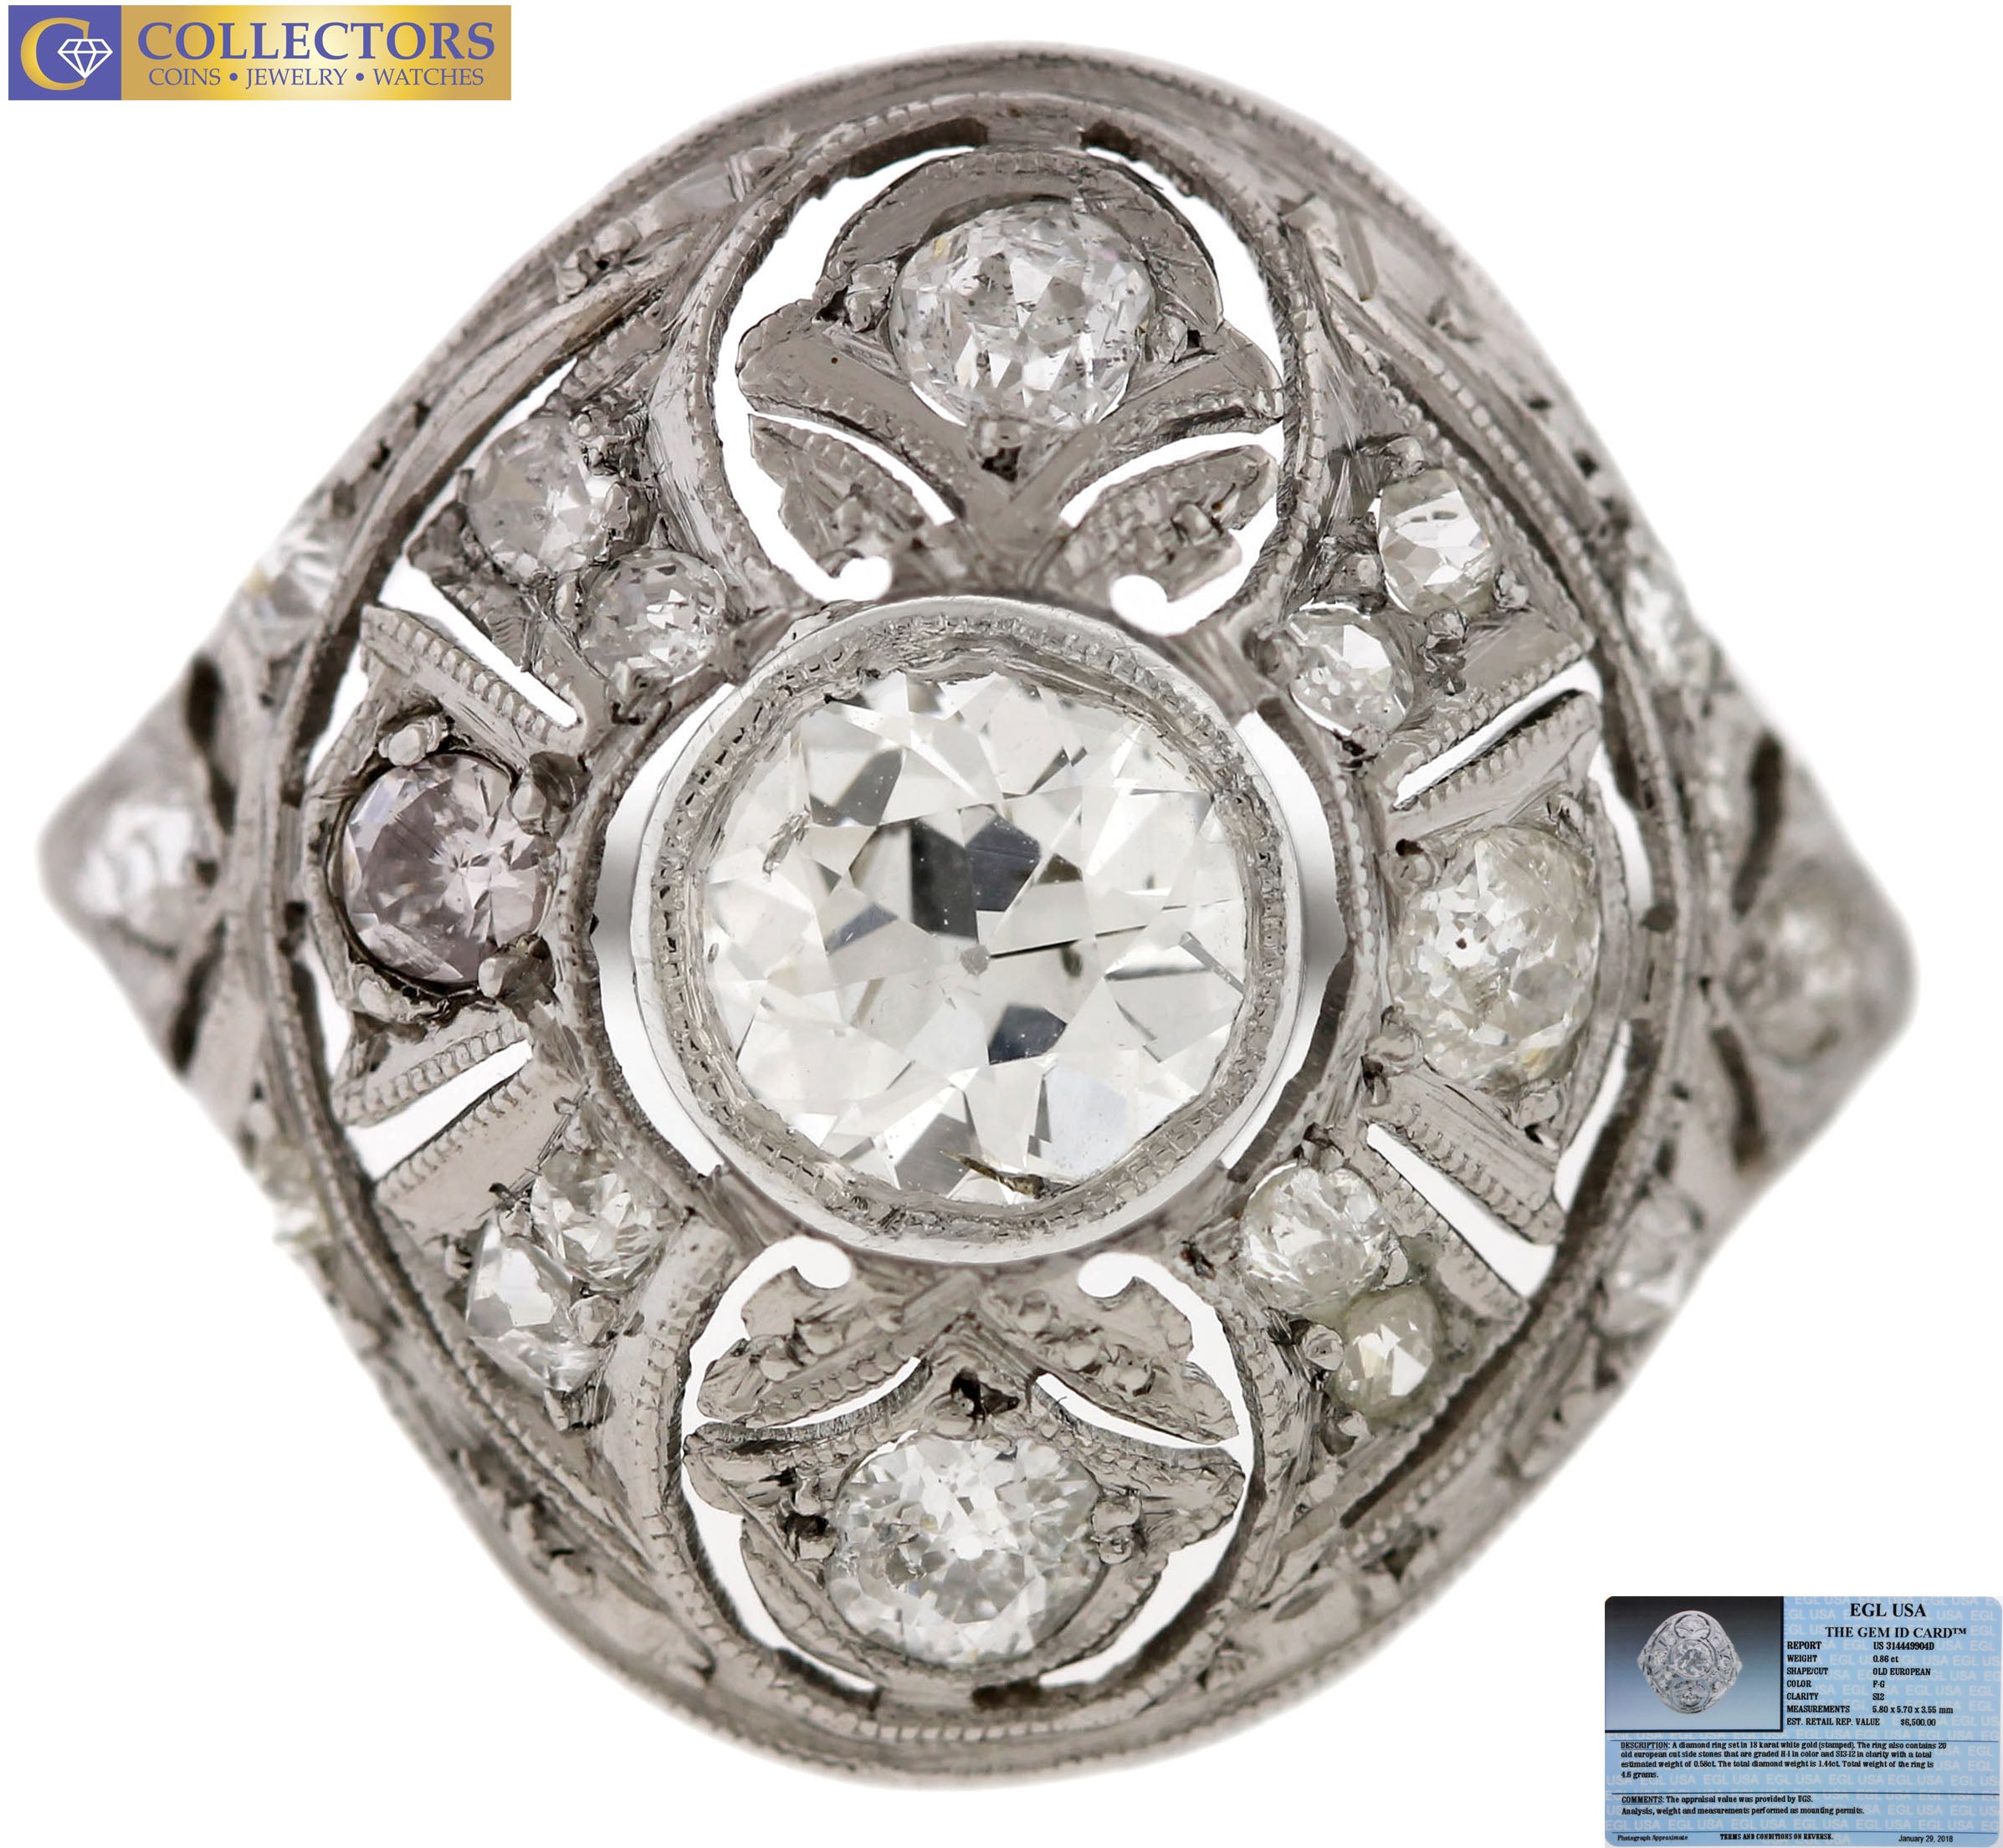 Art Deco 18k White Gold Old European Cut Diamond Solitaire Ring